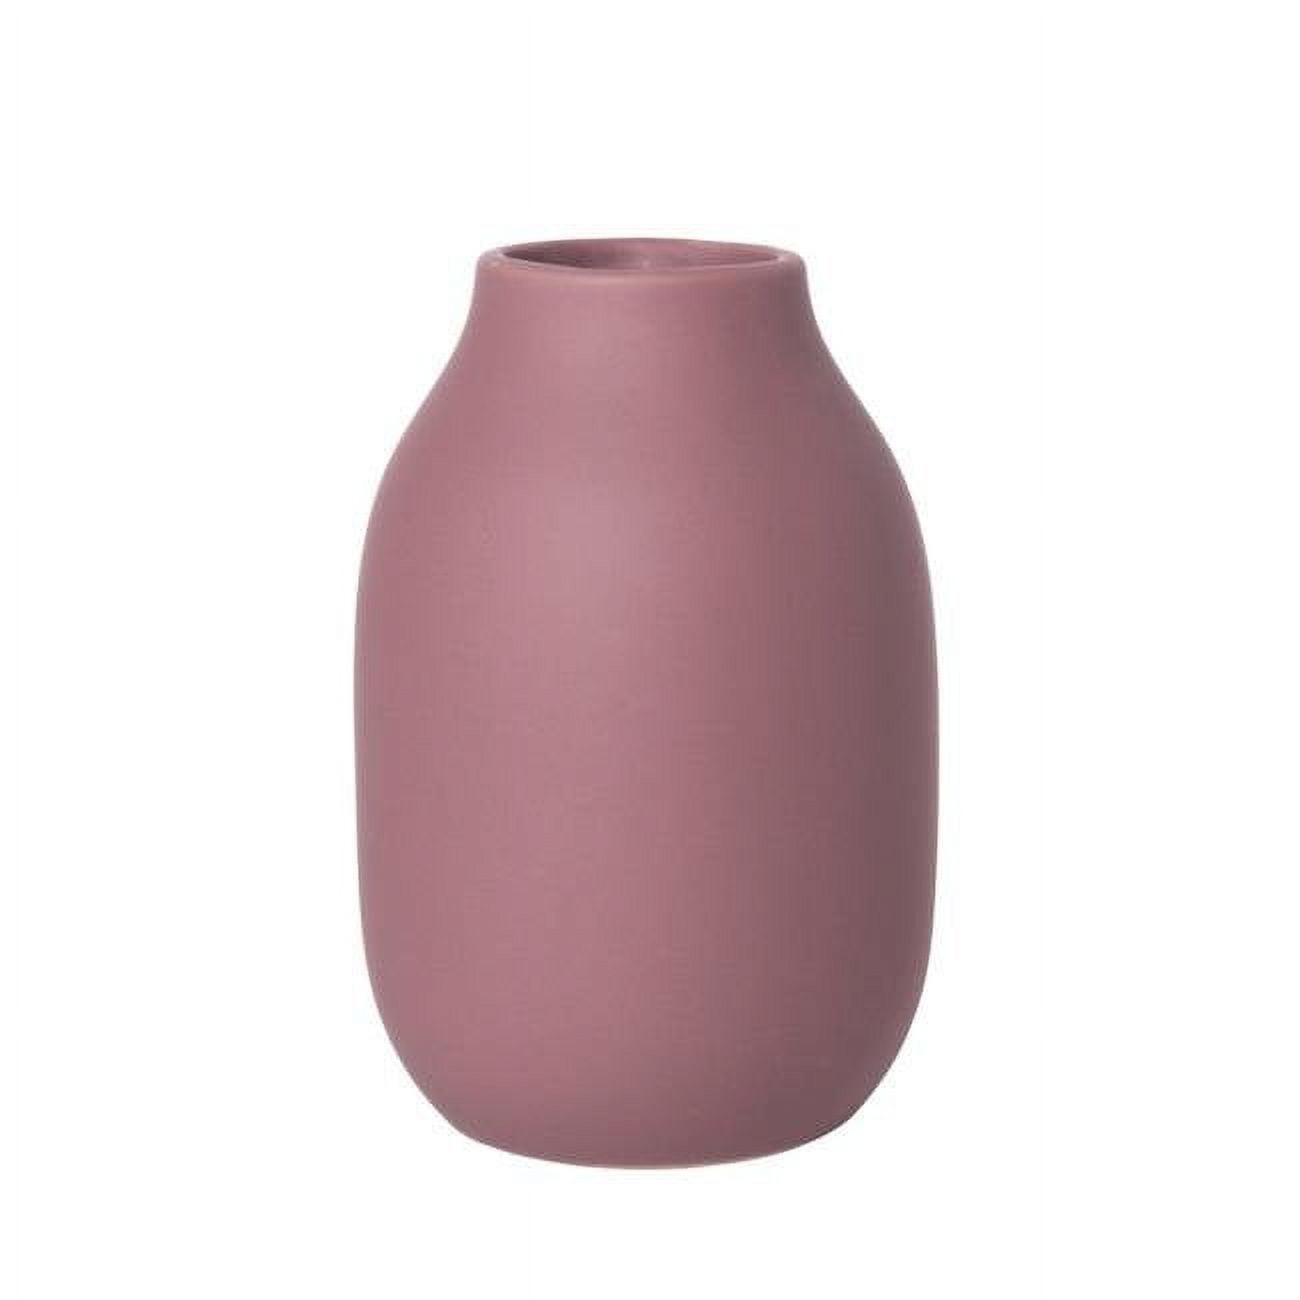 in. Vase, Dust Blomus 65903 x 4 6 Porcelain Colora Rose